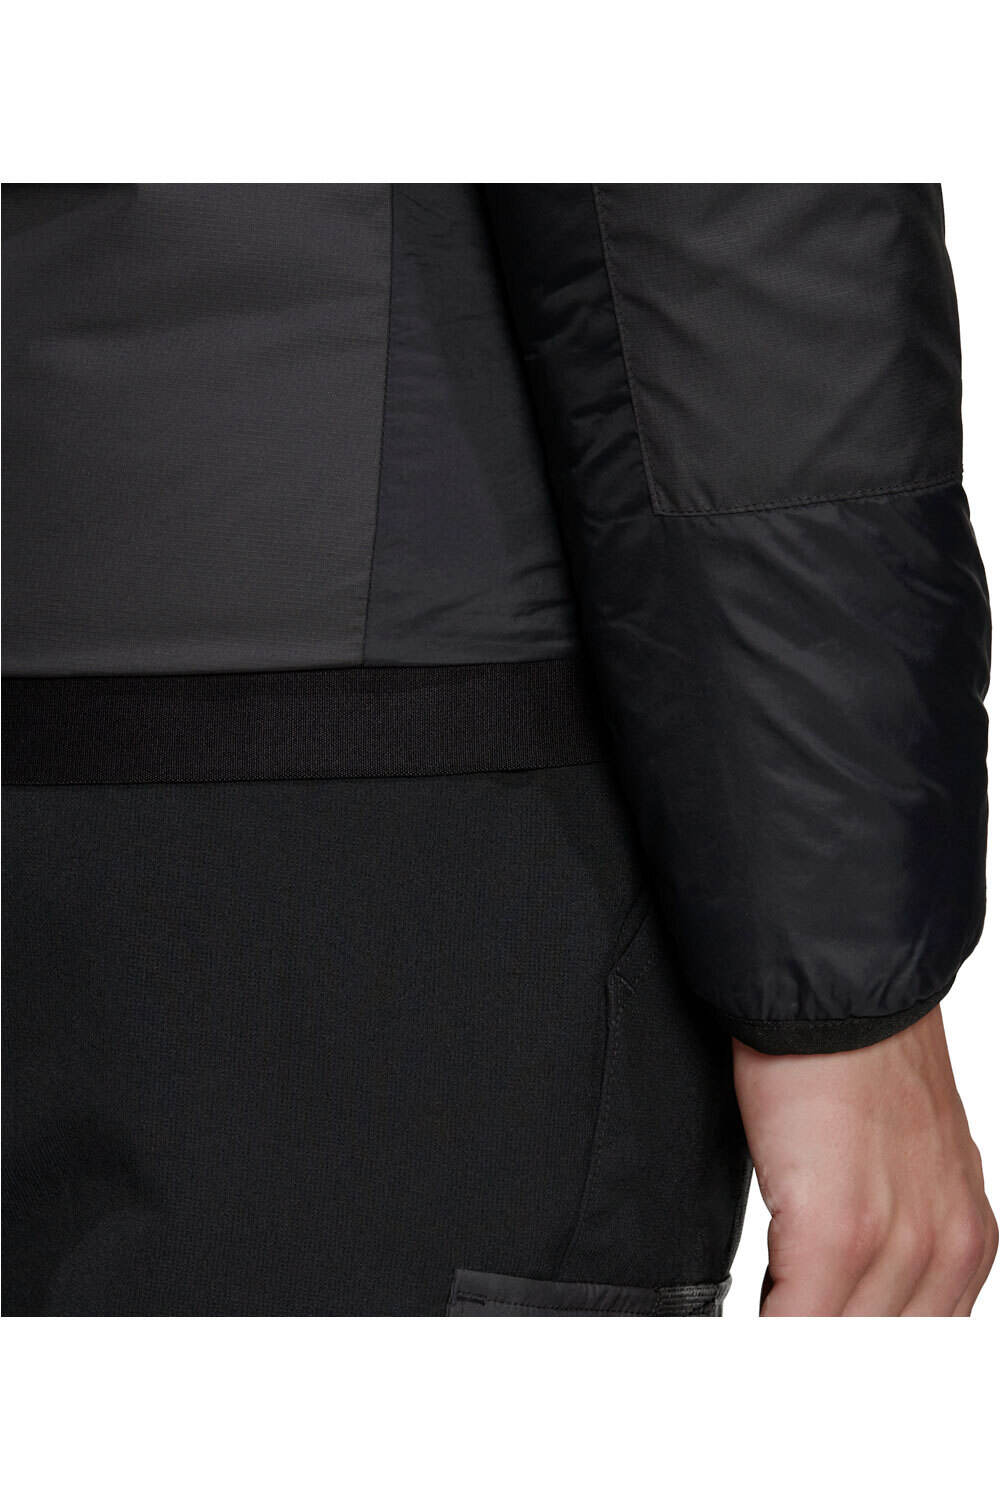 adidas chaqueta outdoor mujer Terrex Multi Synthetic Insulated vista detalle